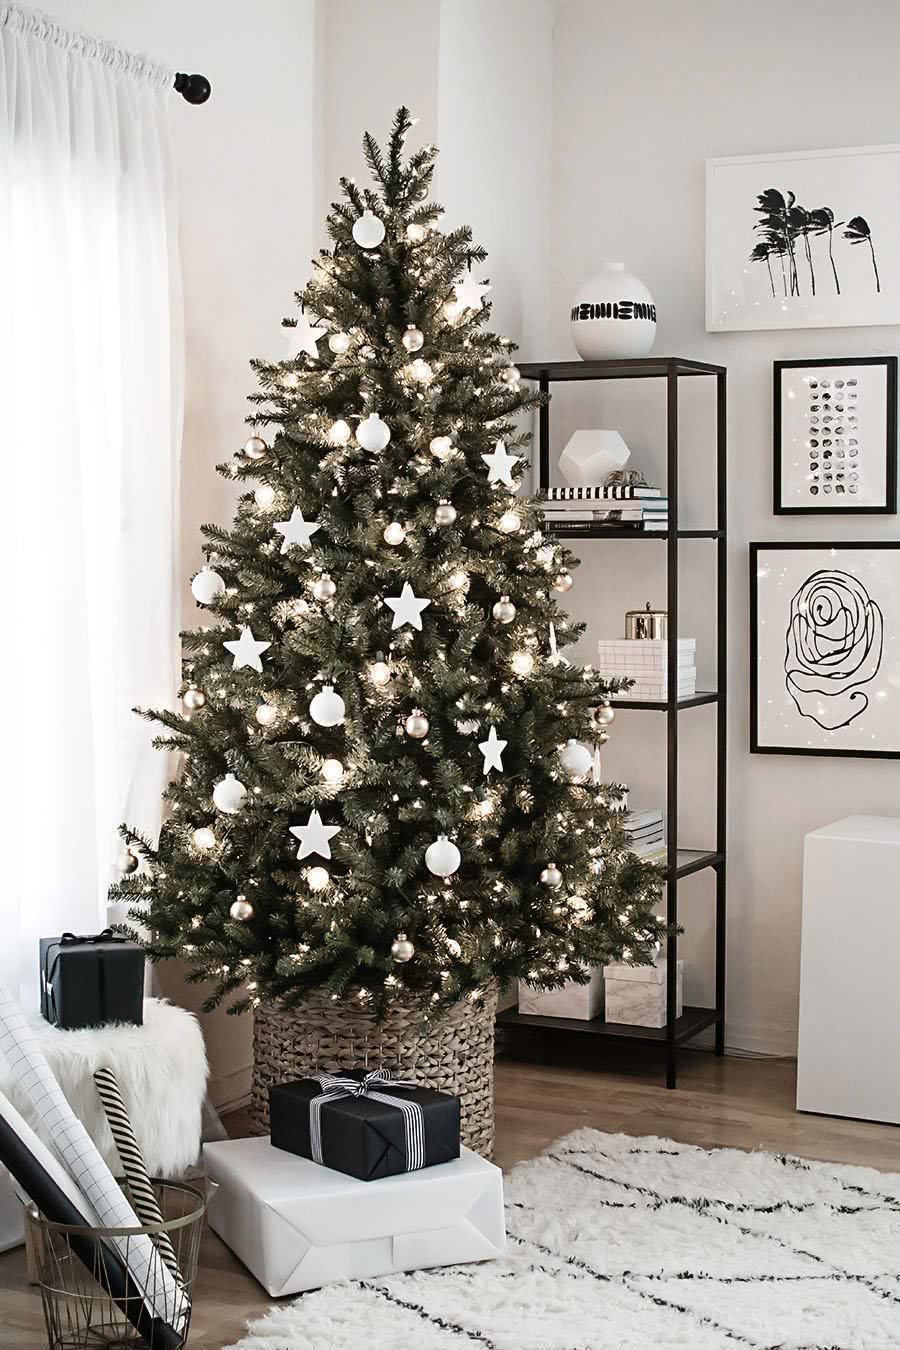 Árvore de Natal pronta para decorar sua sala de estar.